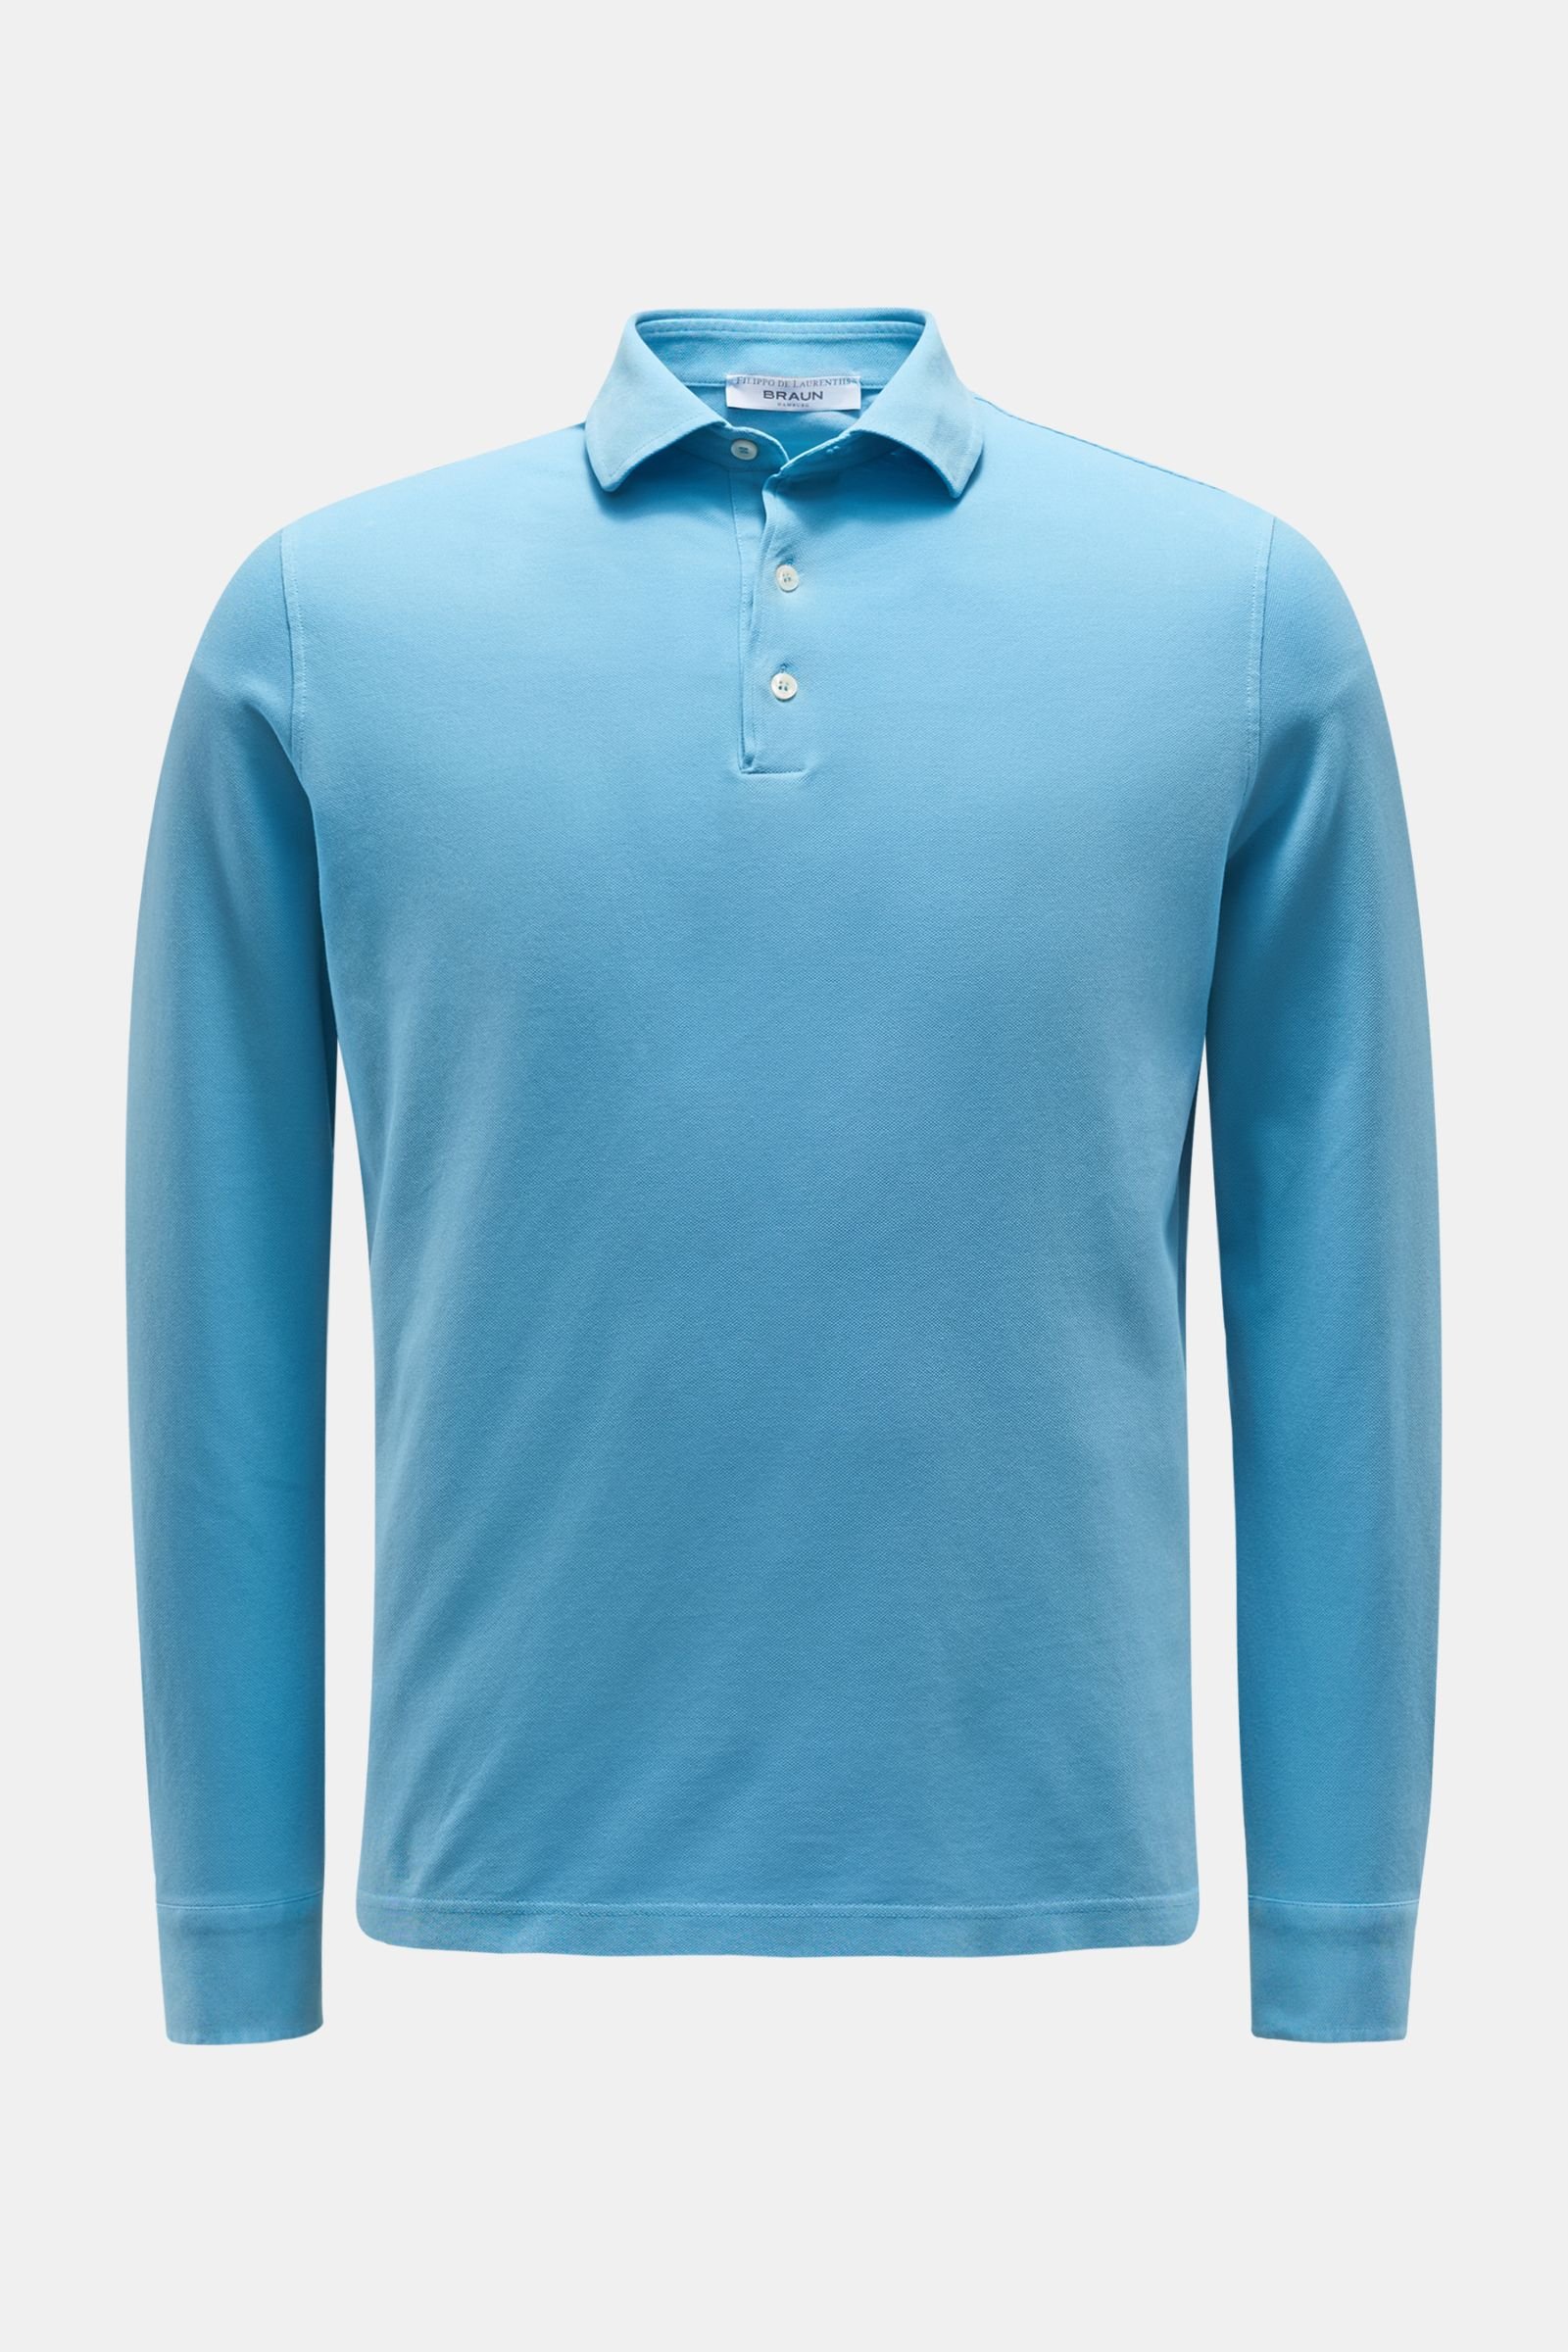 FILIPPO DE LAURENTIIS long sleeve polo shirt light blue | BRAUN Hamburg